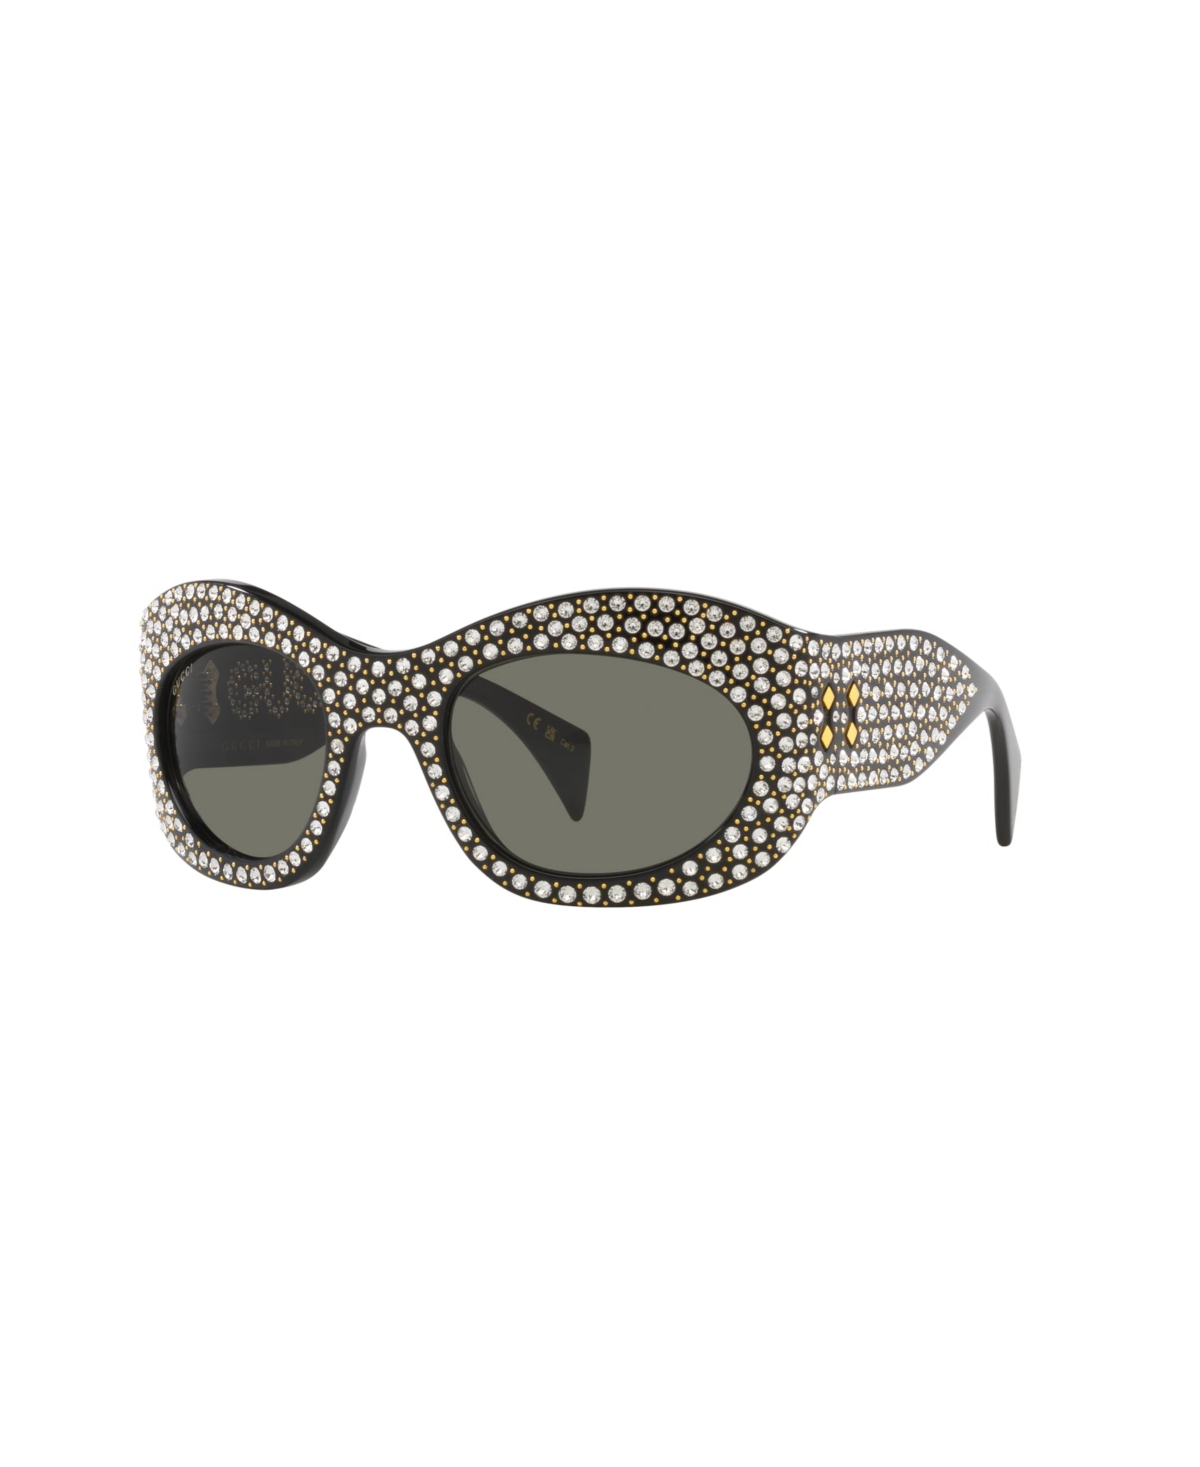 Unisex Sunglasses, GG1463S - Black